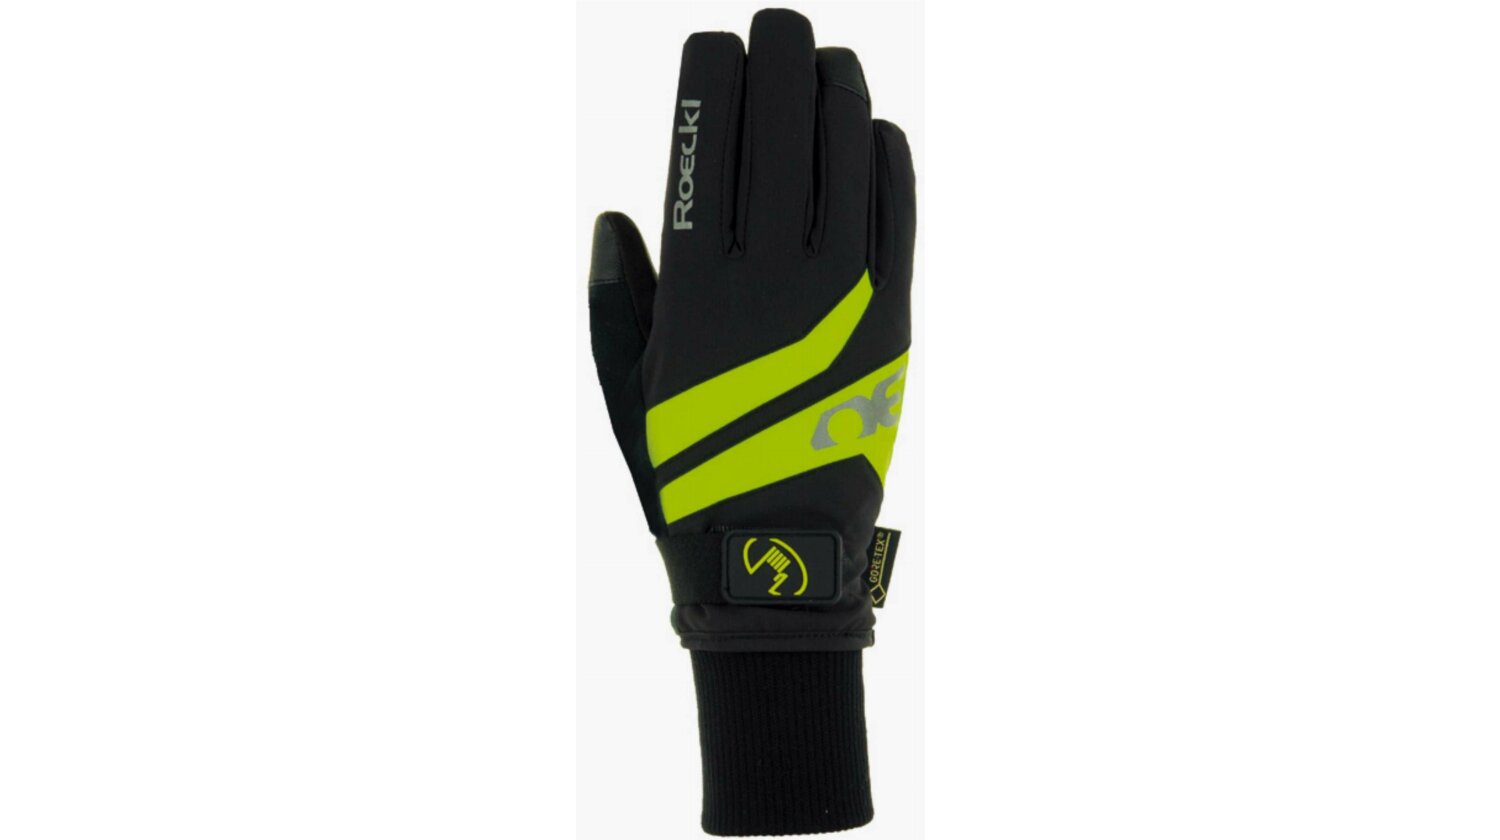 Roeckl Rocca GTX Handschuhe lang schwarz/gelb 8